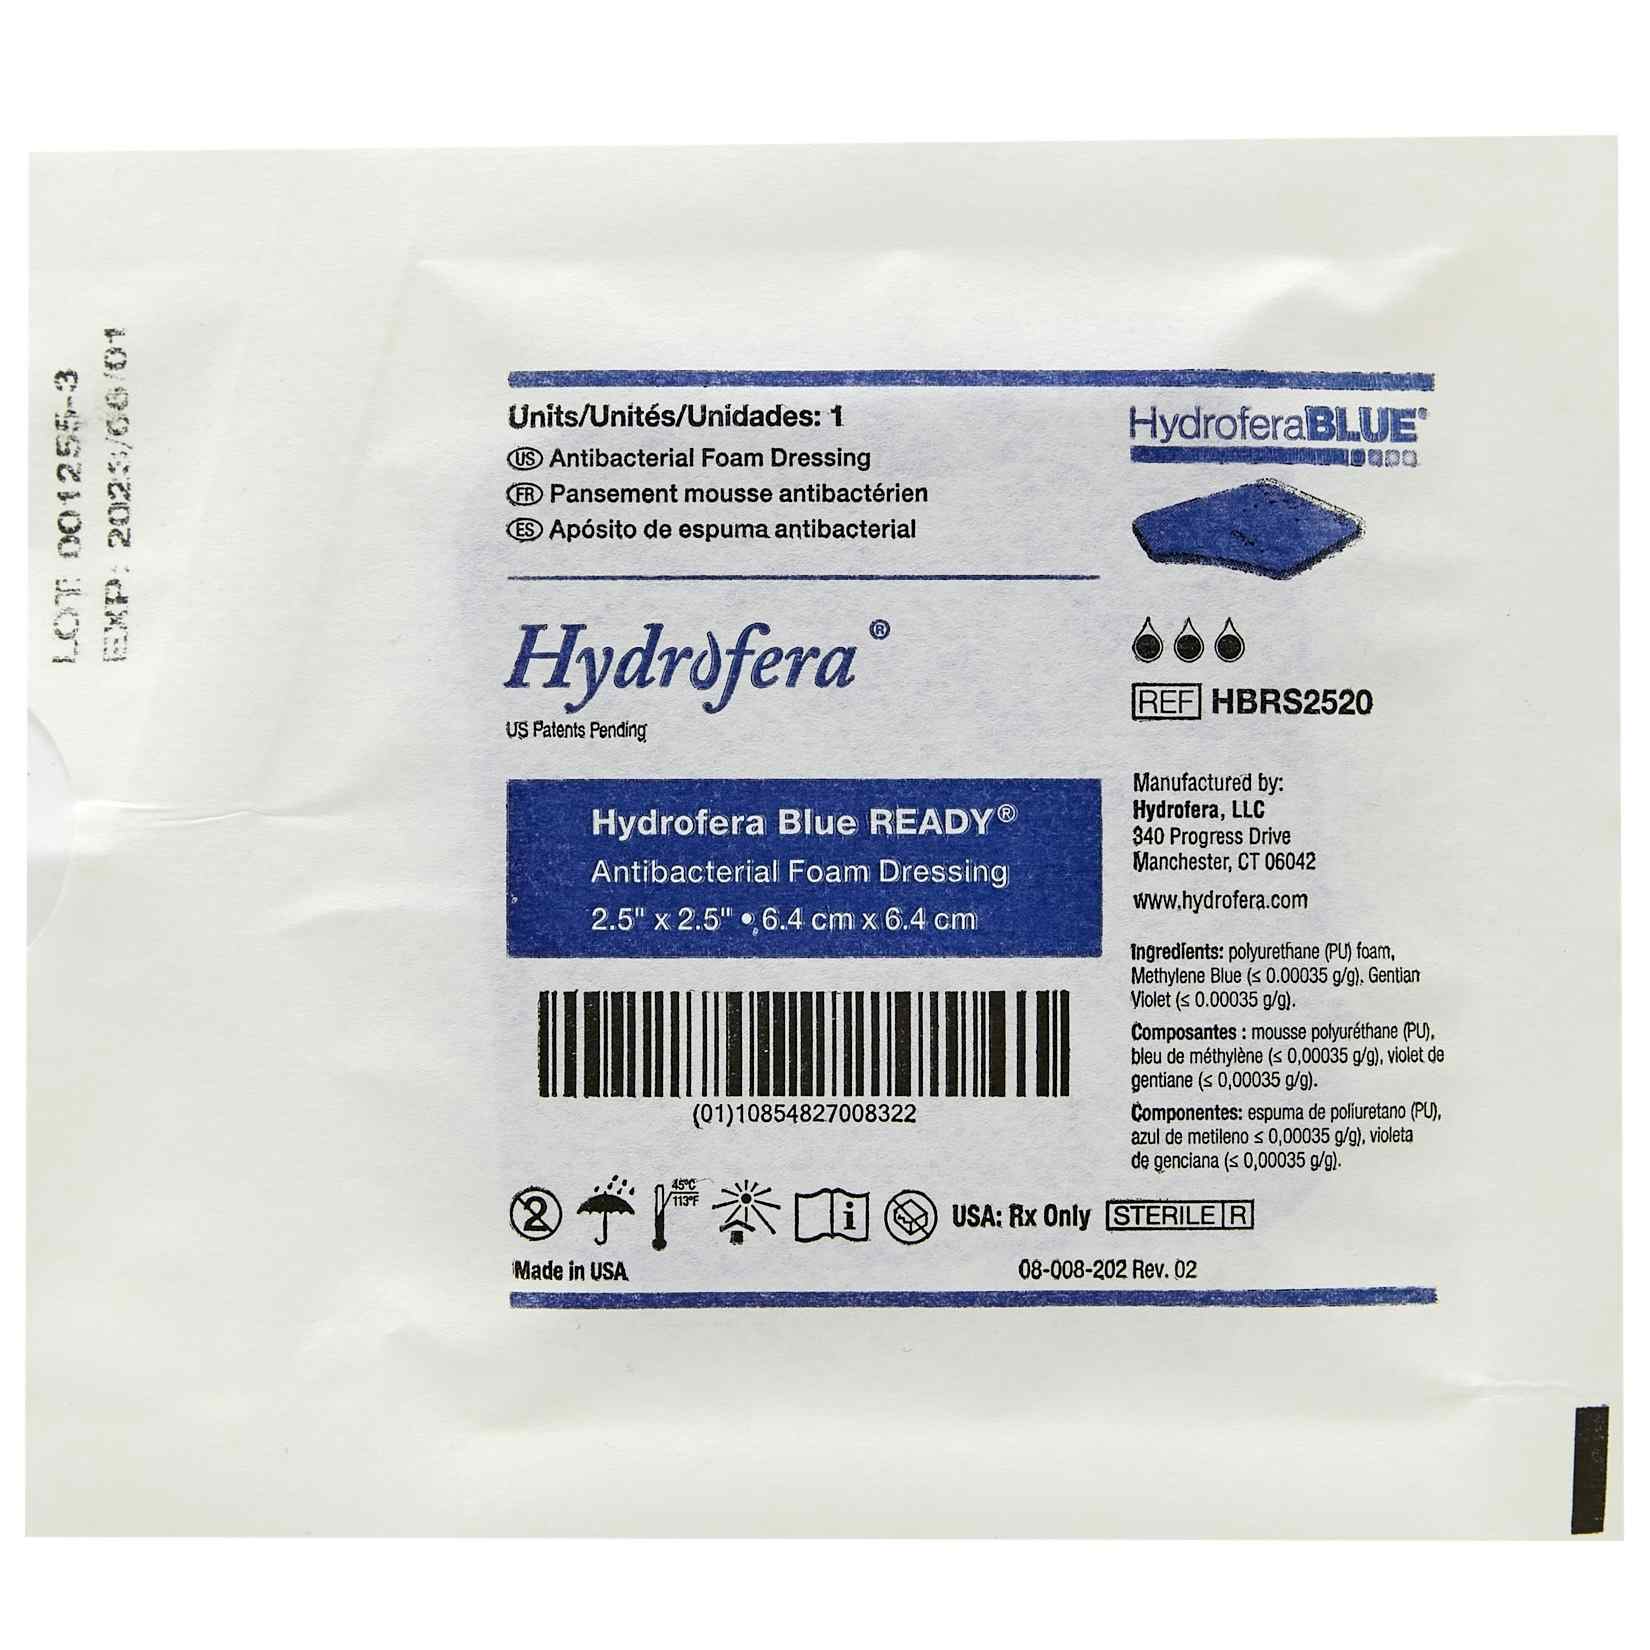 Hydrofera Blue READY Antibacterial Foam Dressing